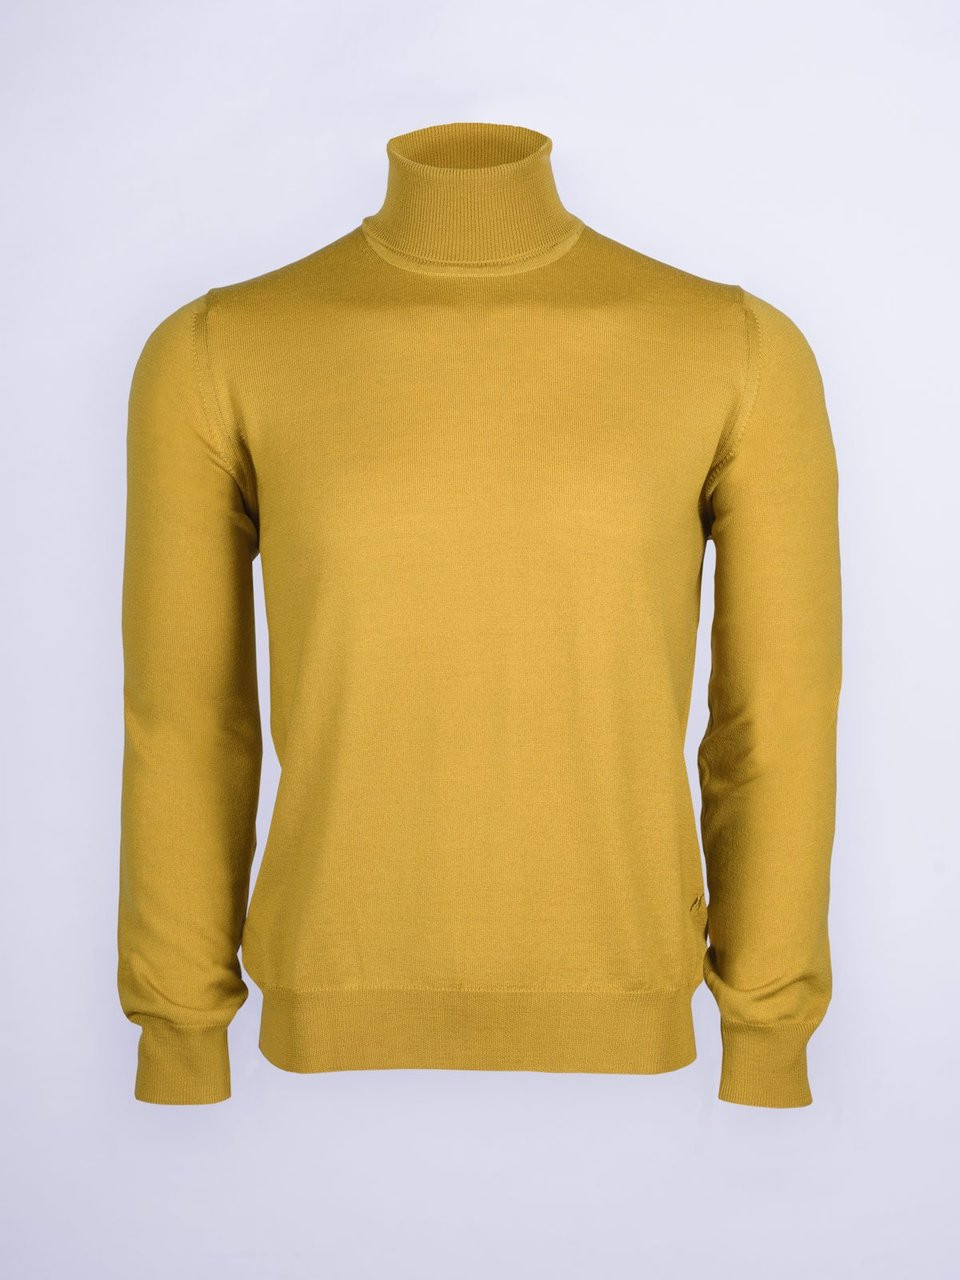 Gold Turtleneck Sweater